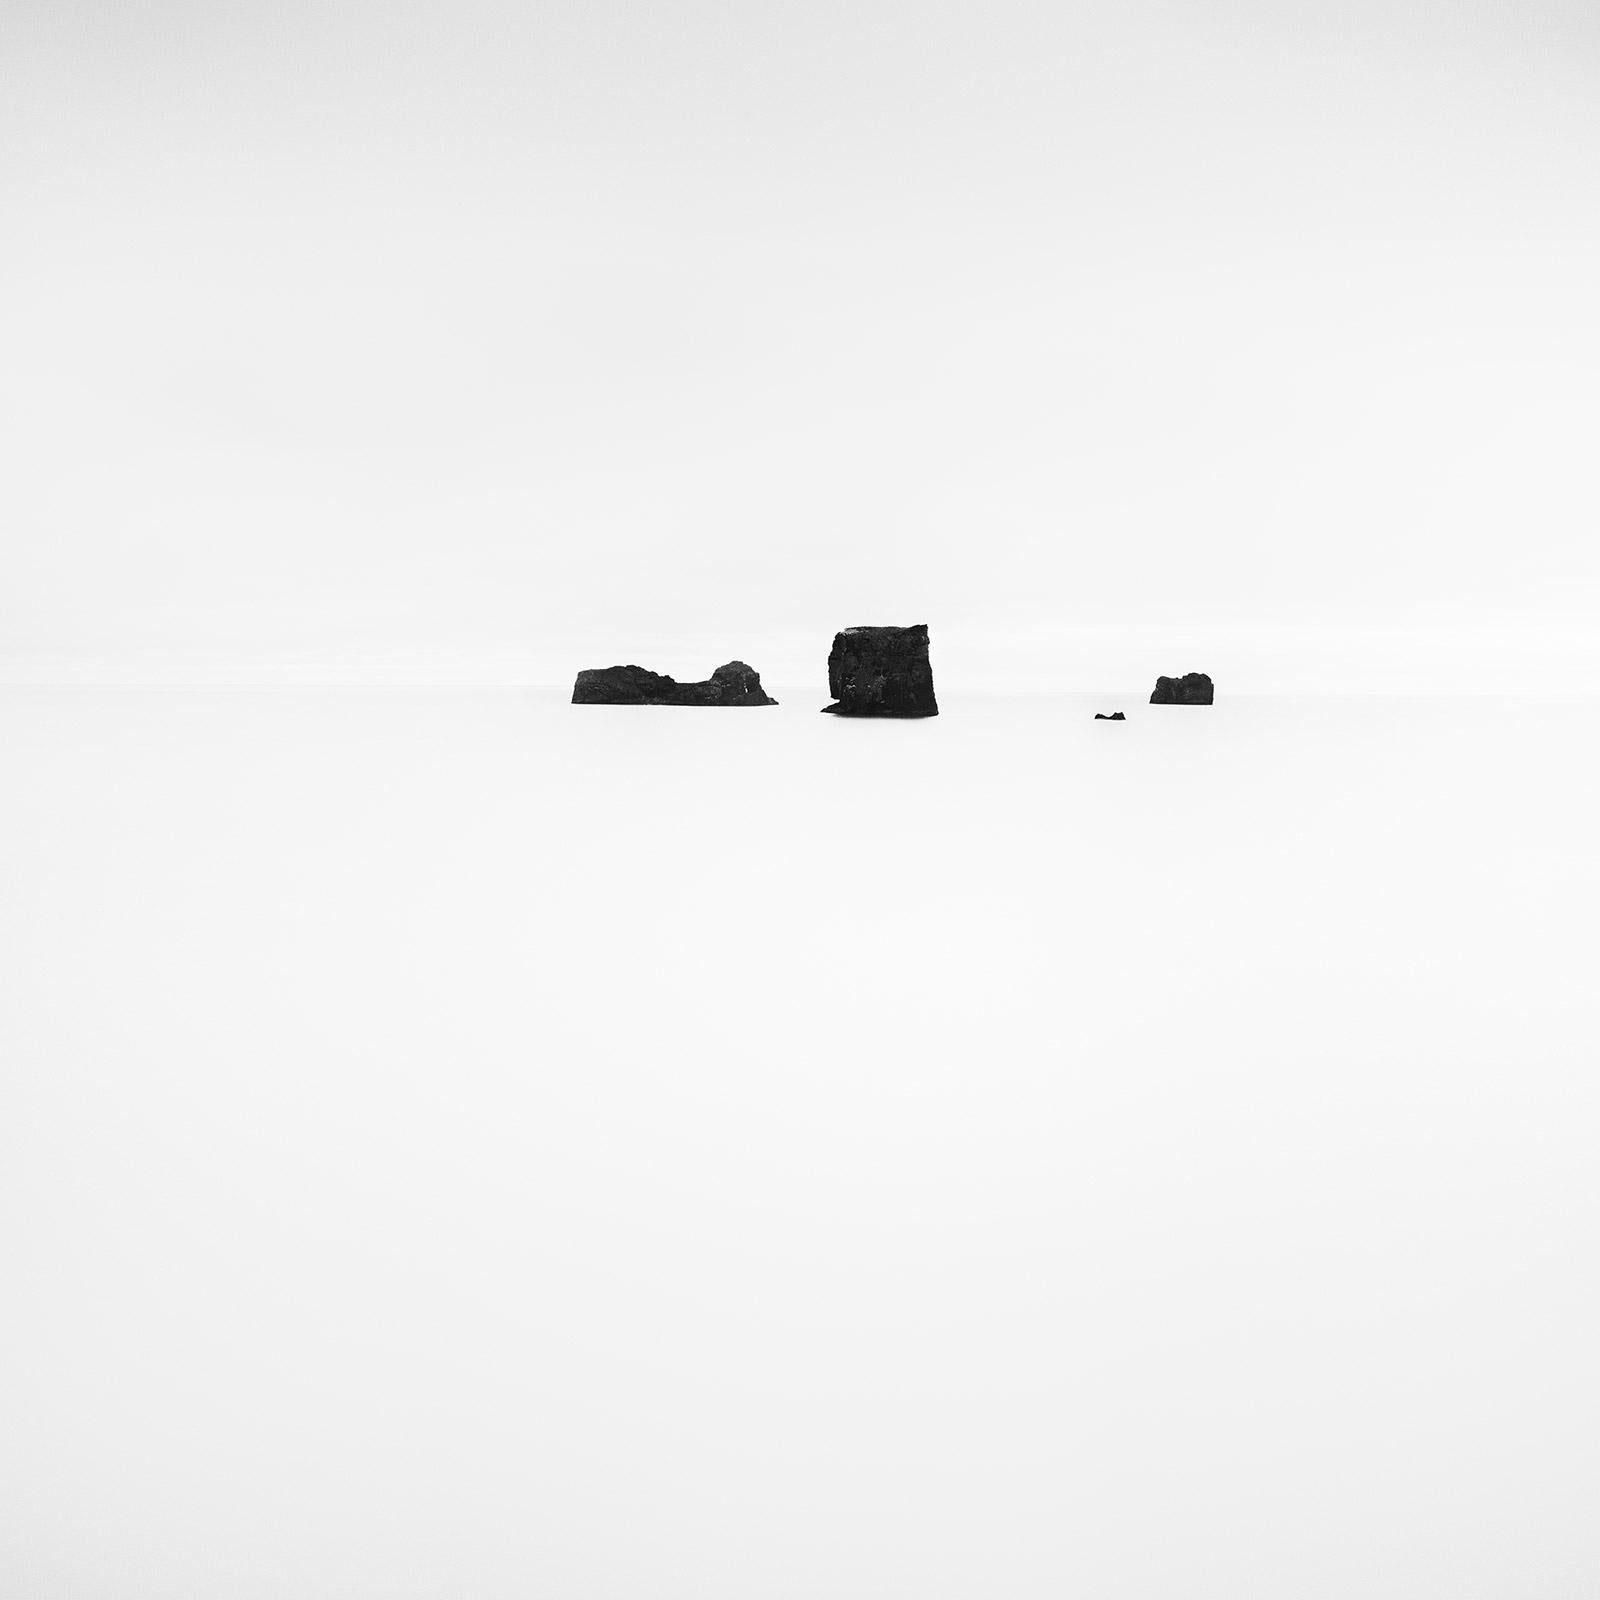 Black and White Photograph Gerald Berghammer - Roches noires, Islande, minimaliste, noir et blanc, art paysage, photographie	